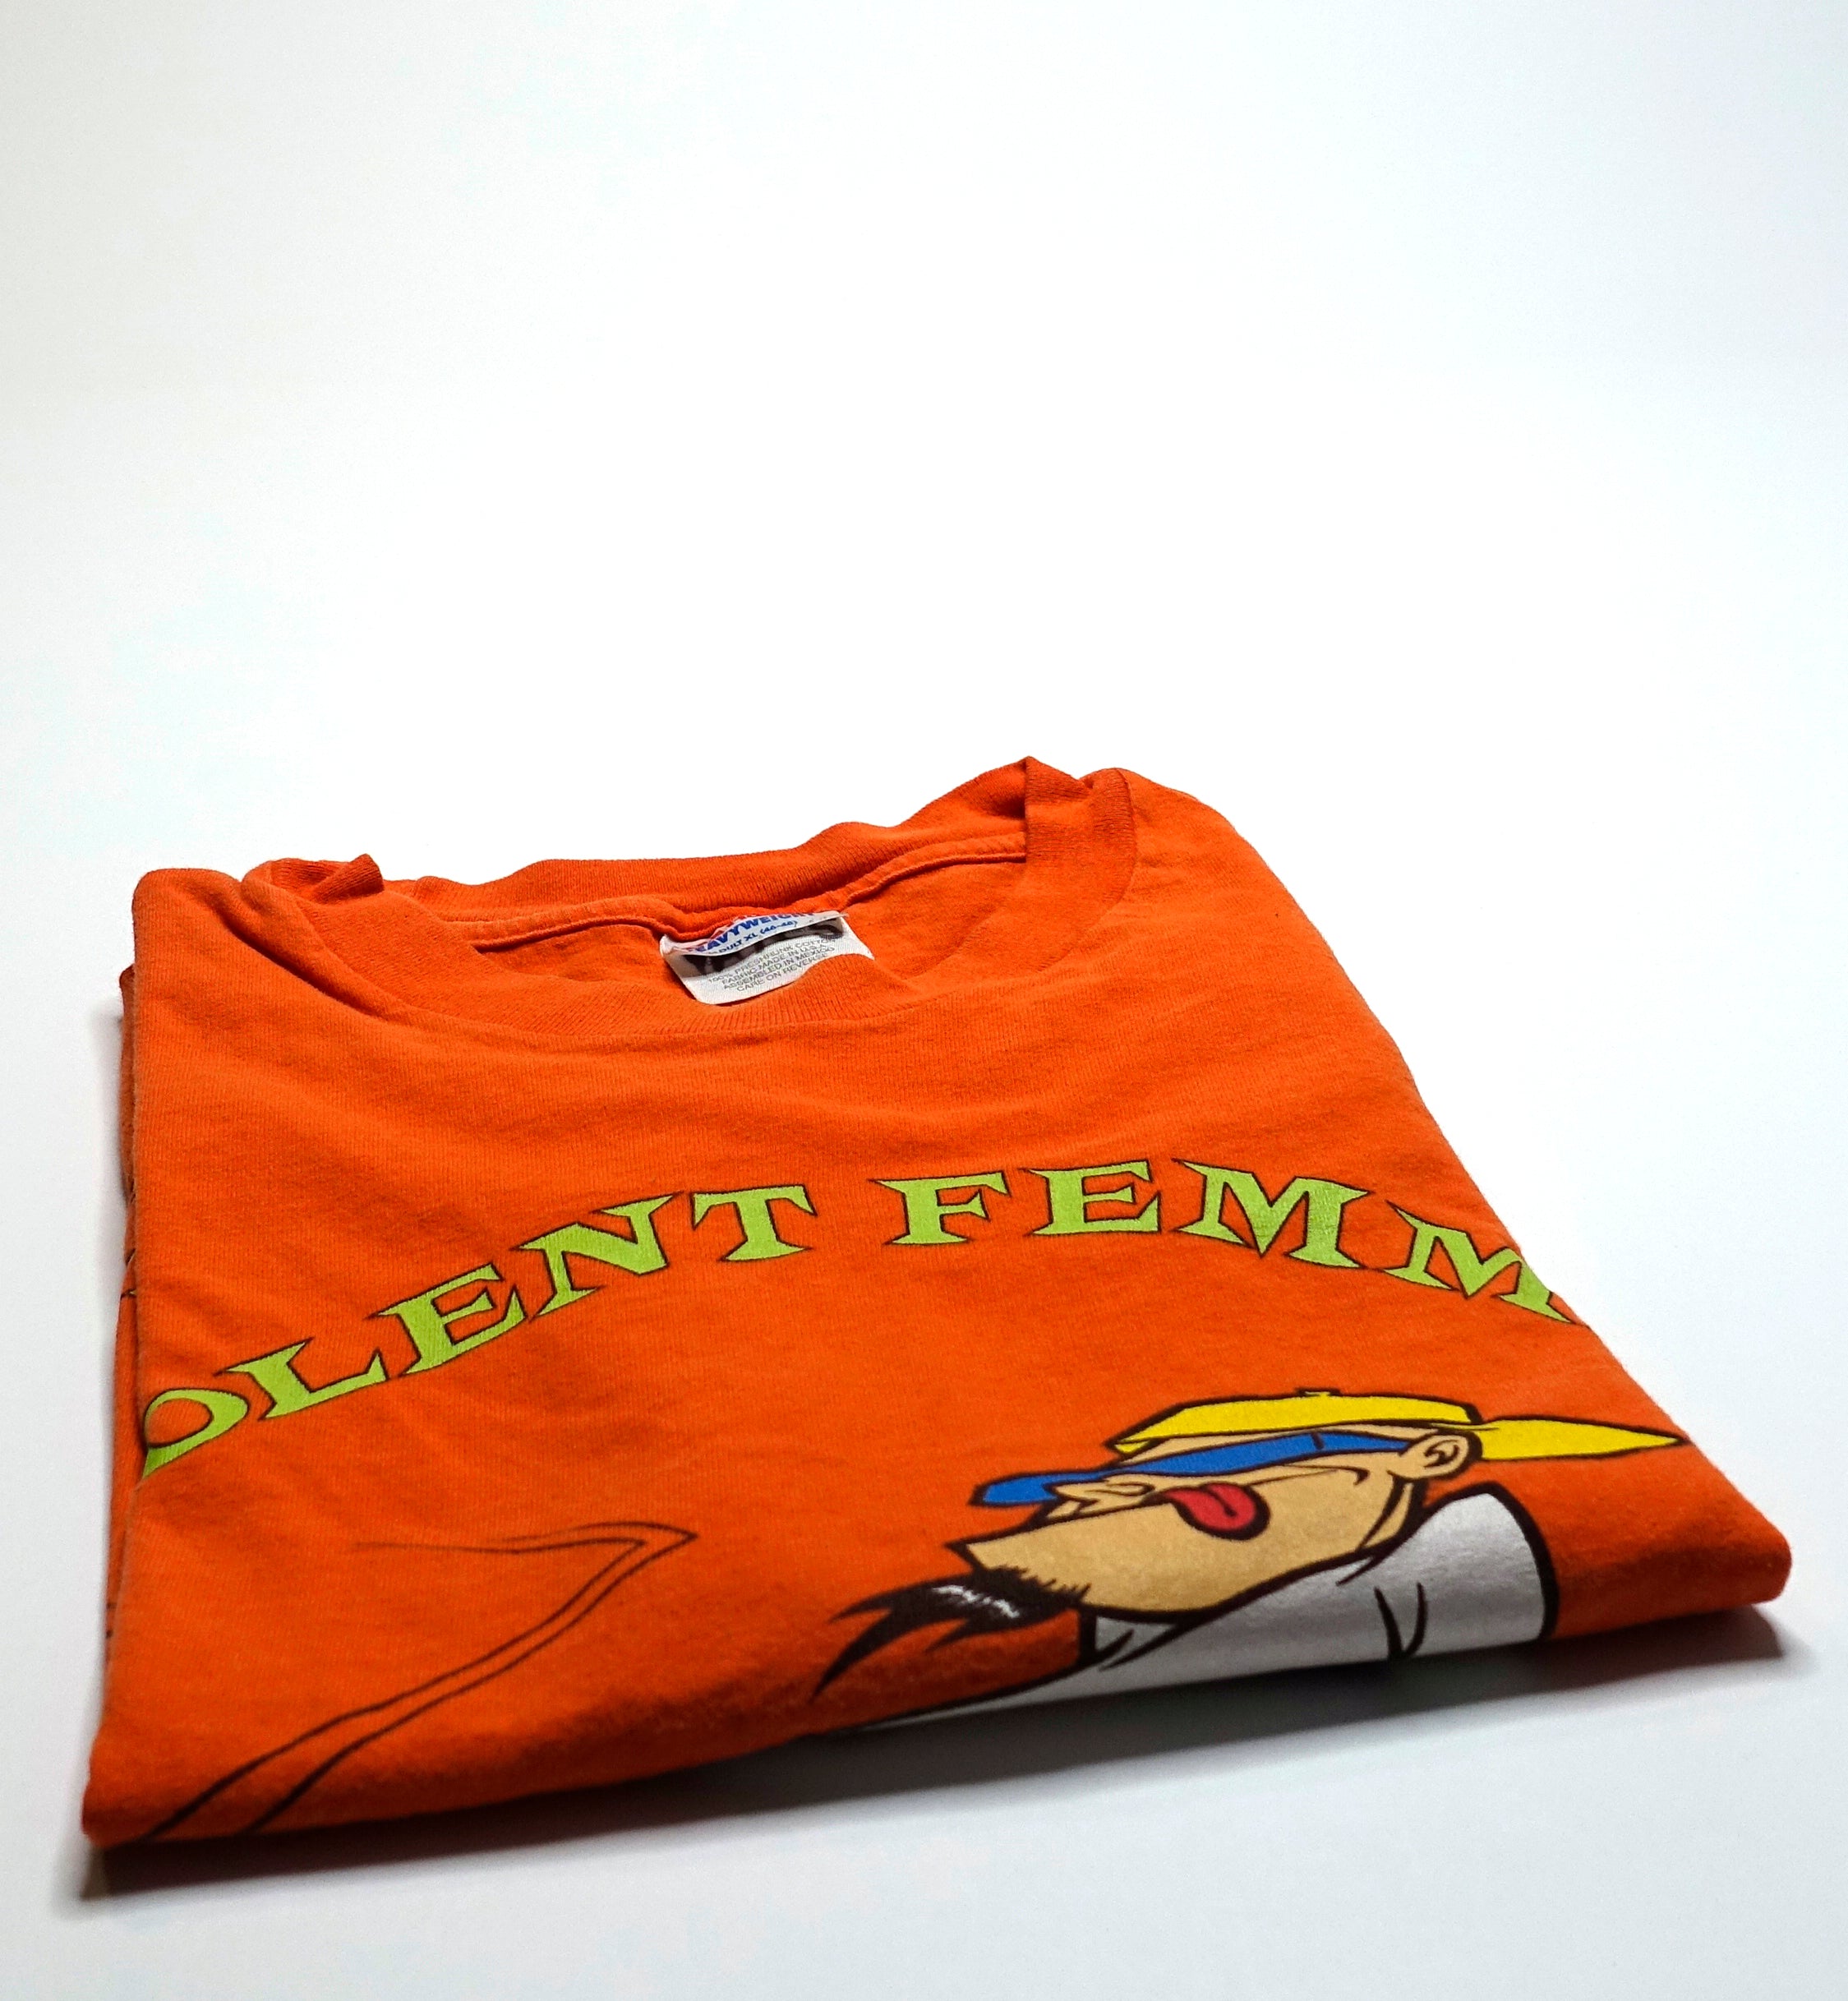 Violent Femmes - ...I Strut My Stuff 1997 Tour Shirt Size XL